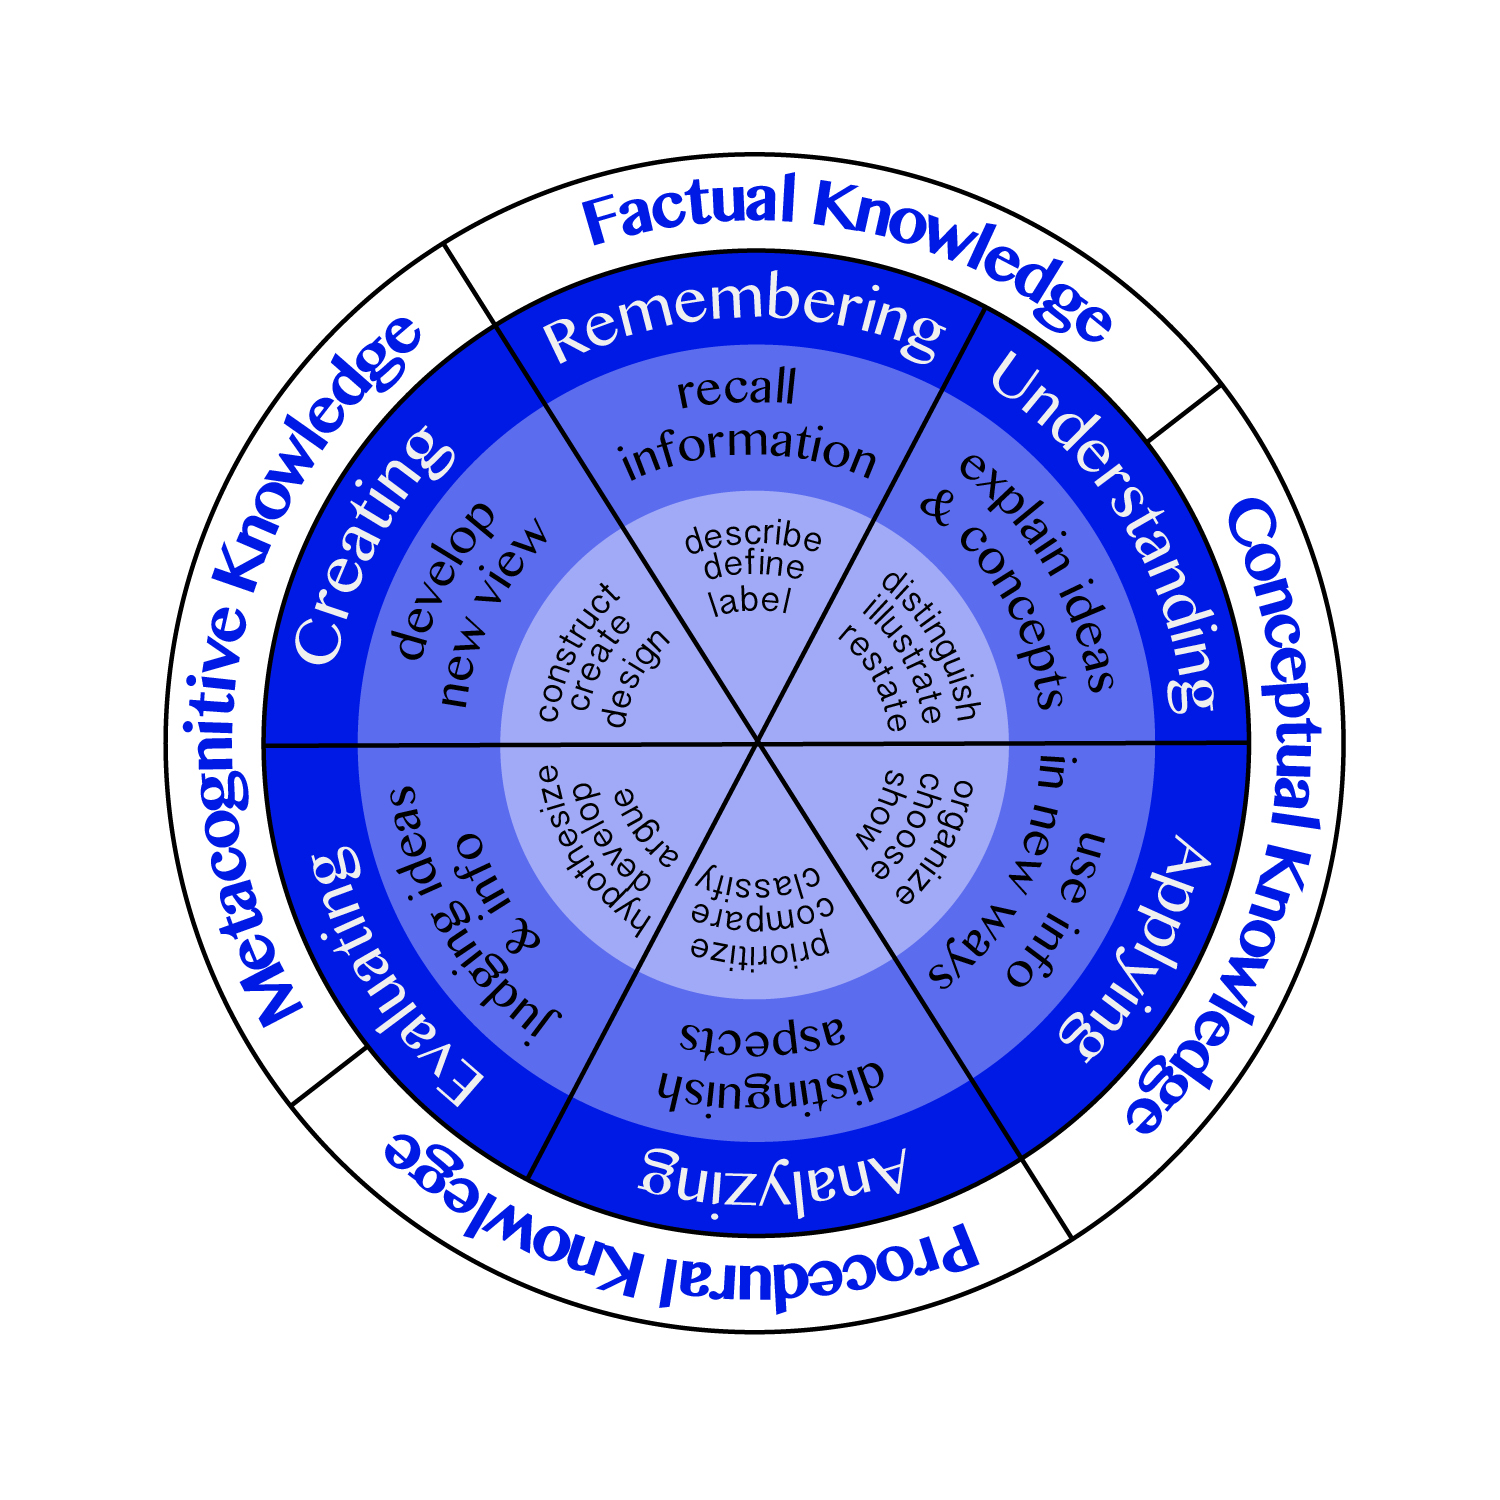 Bloom's Taxonomy Wheel